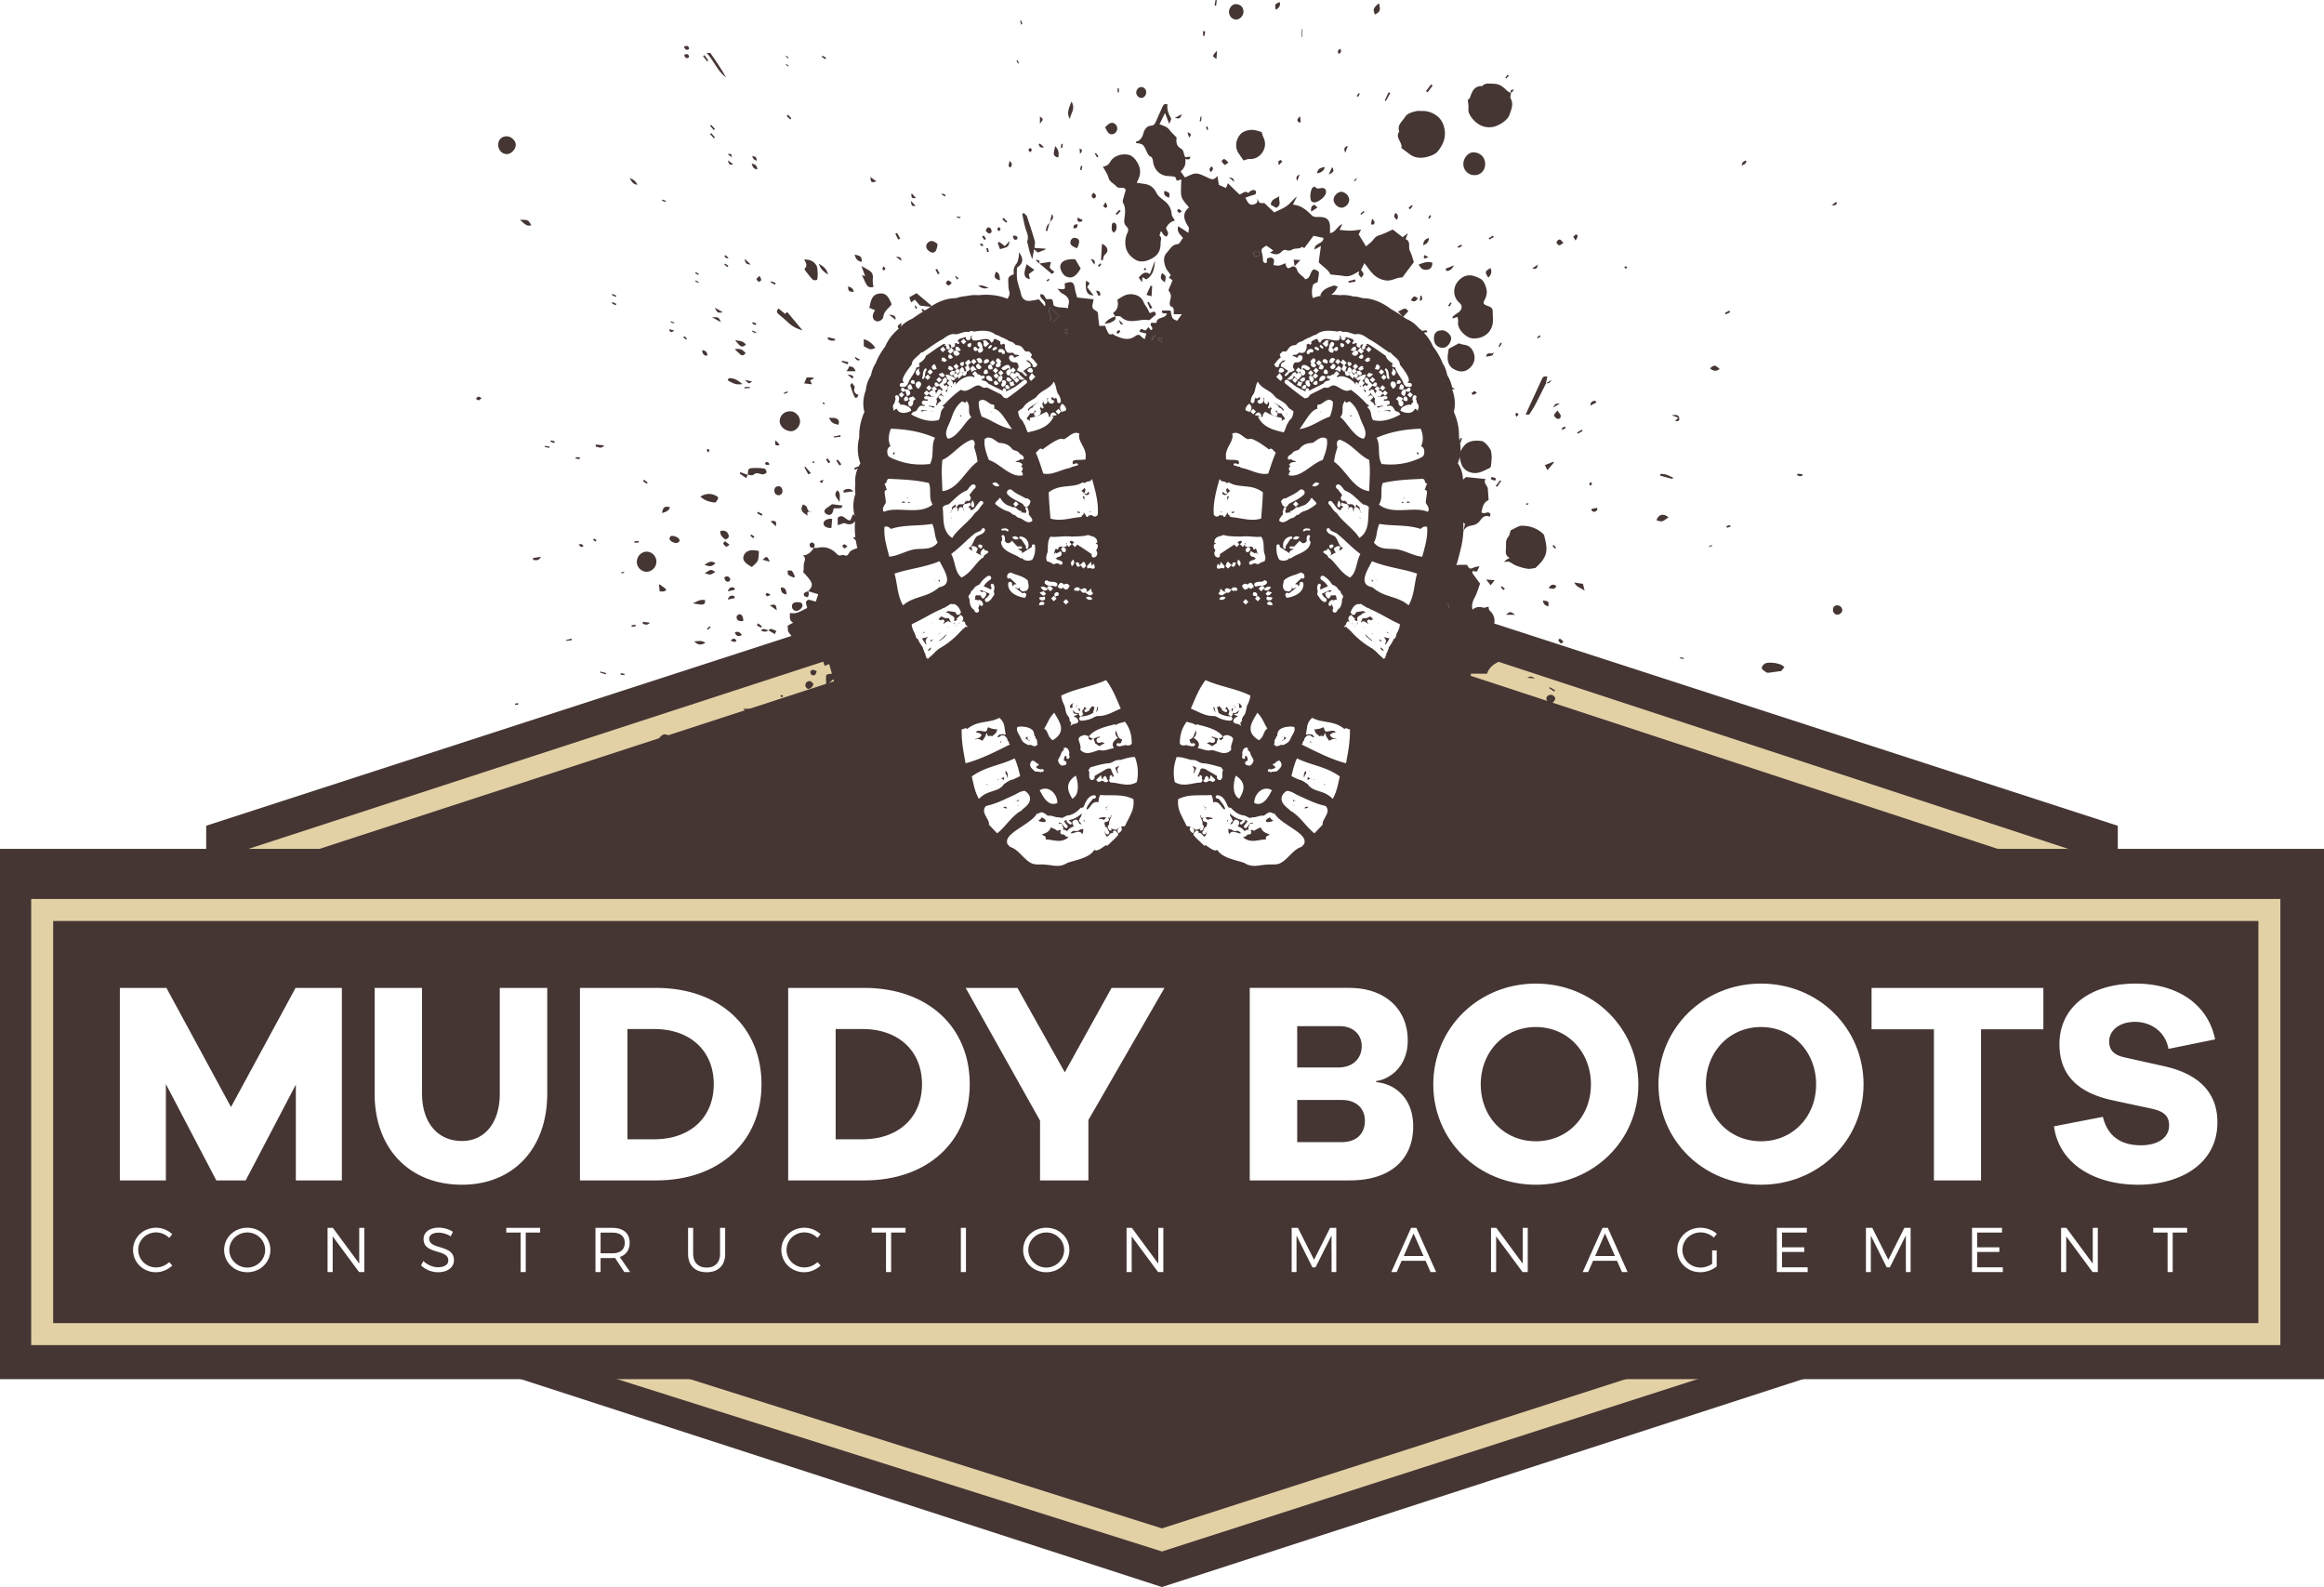 Muddy Boots Construction Management